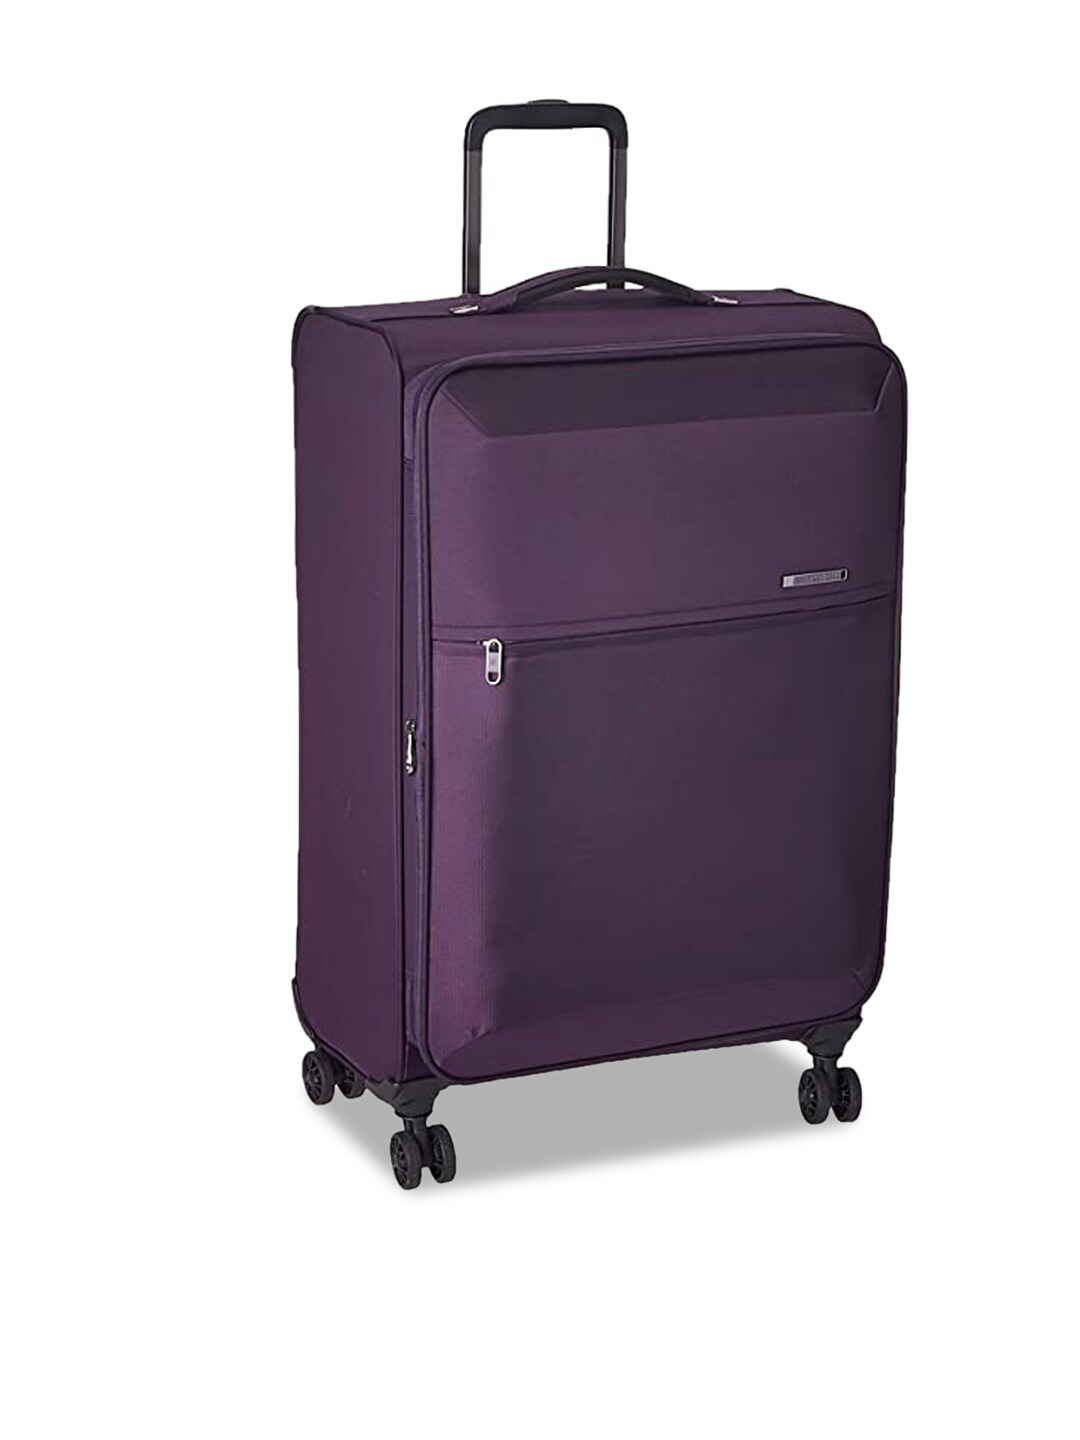 Samsonite Purple Solid Soft Sided Medium Trolley Suitcase Price in India